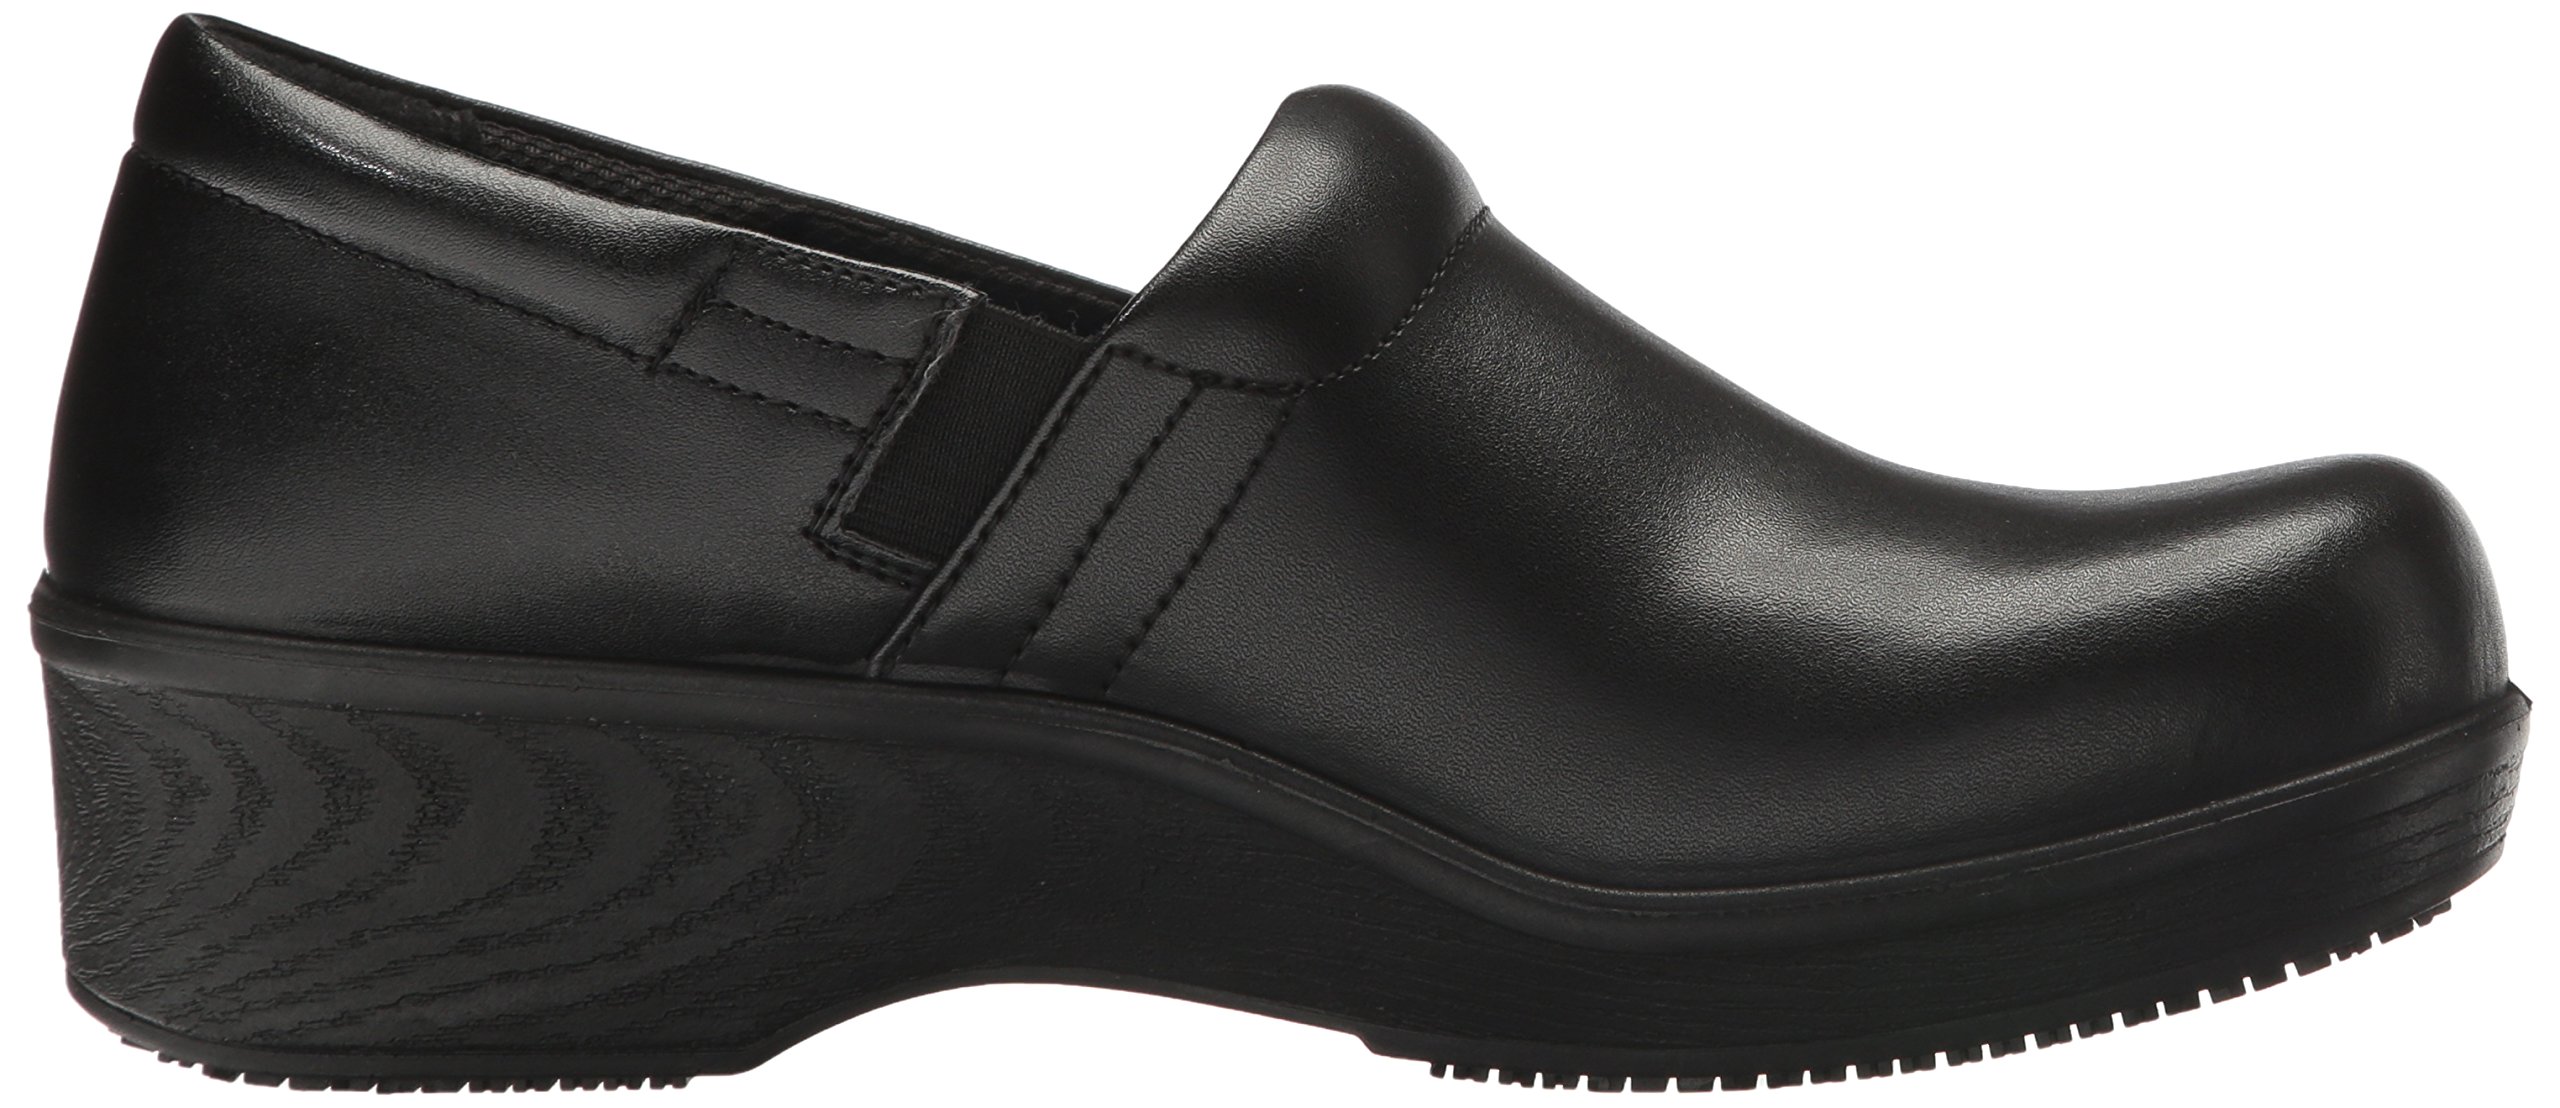 Dr. Scholl's Shoes Women's Dynamo Work Shoe, Black Leather, 9 US